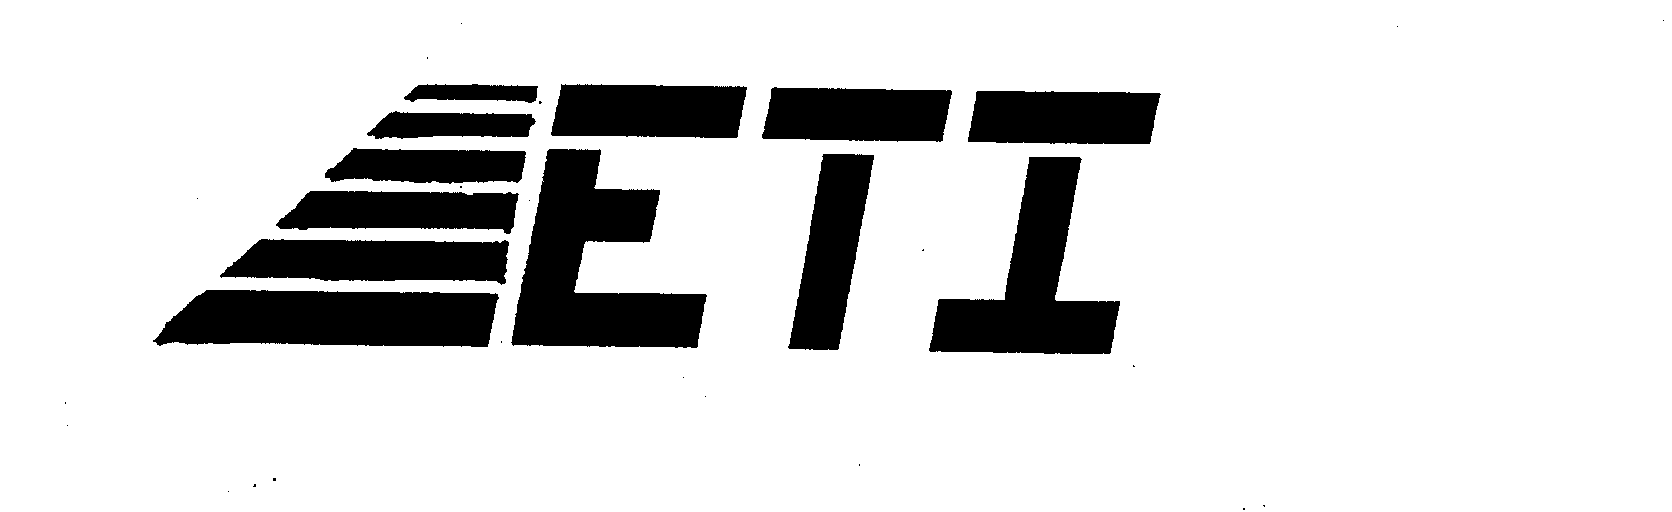 Trademark Logo ETI